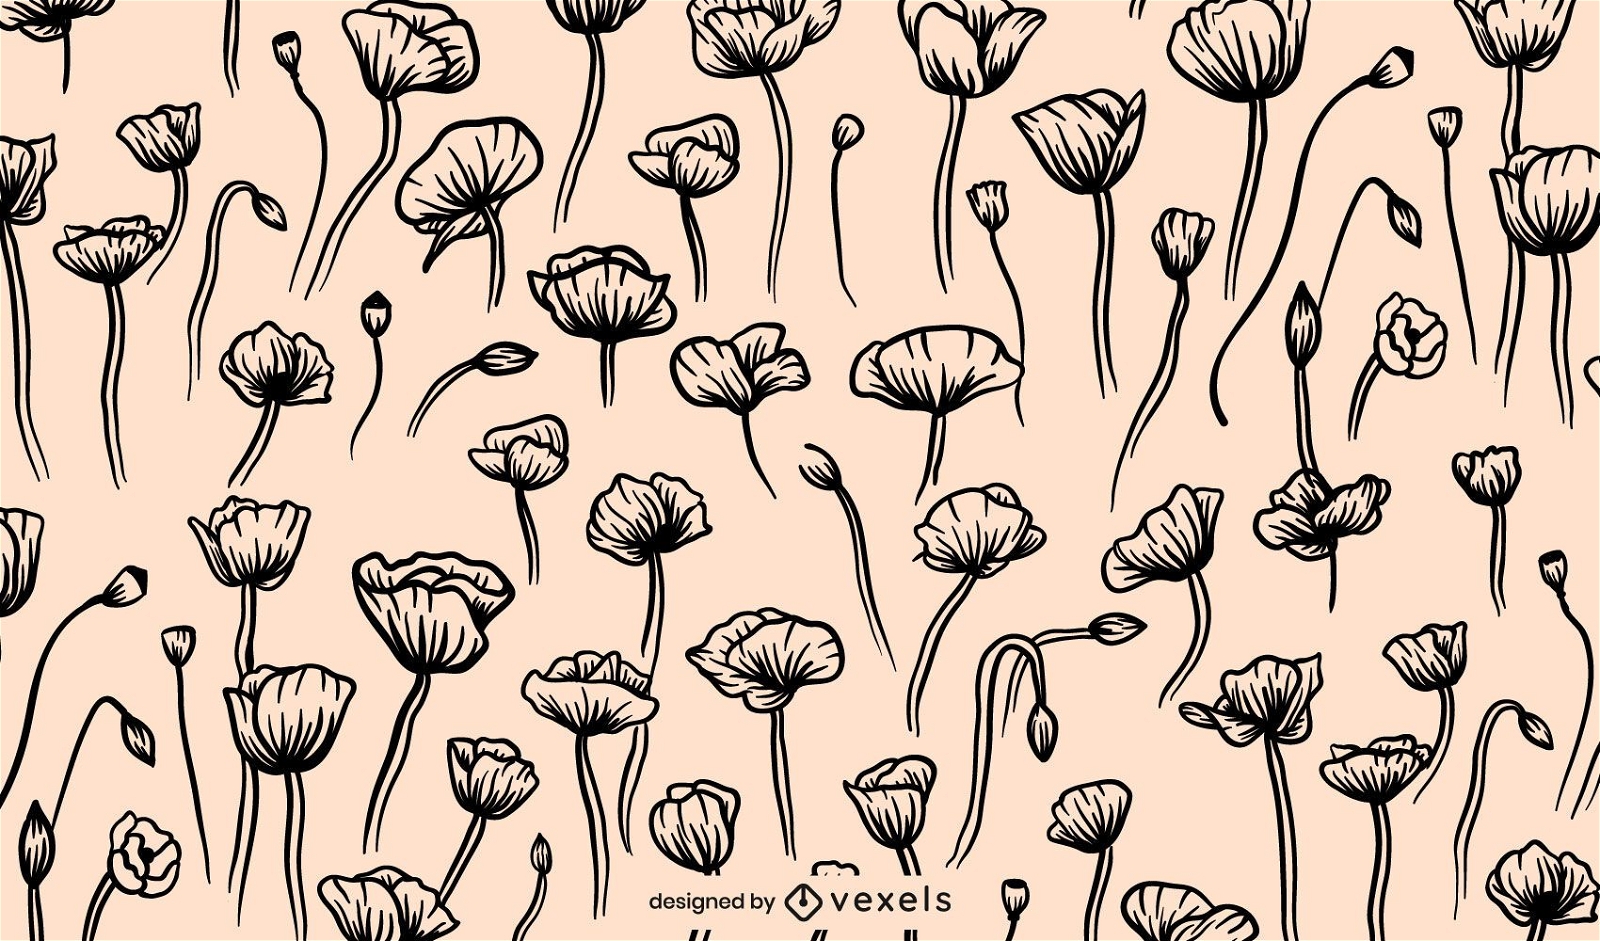 Poppy flower pattern design